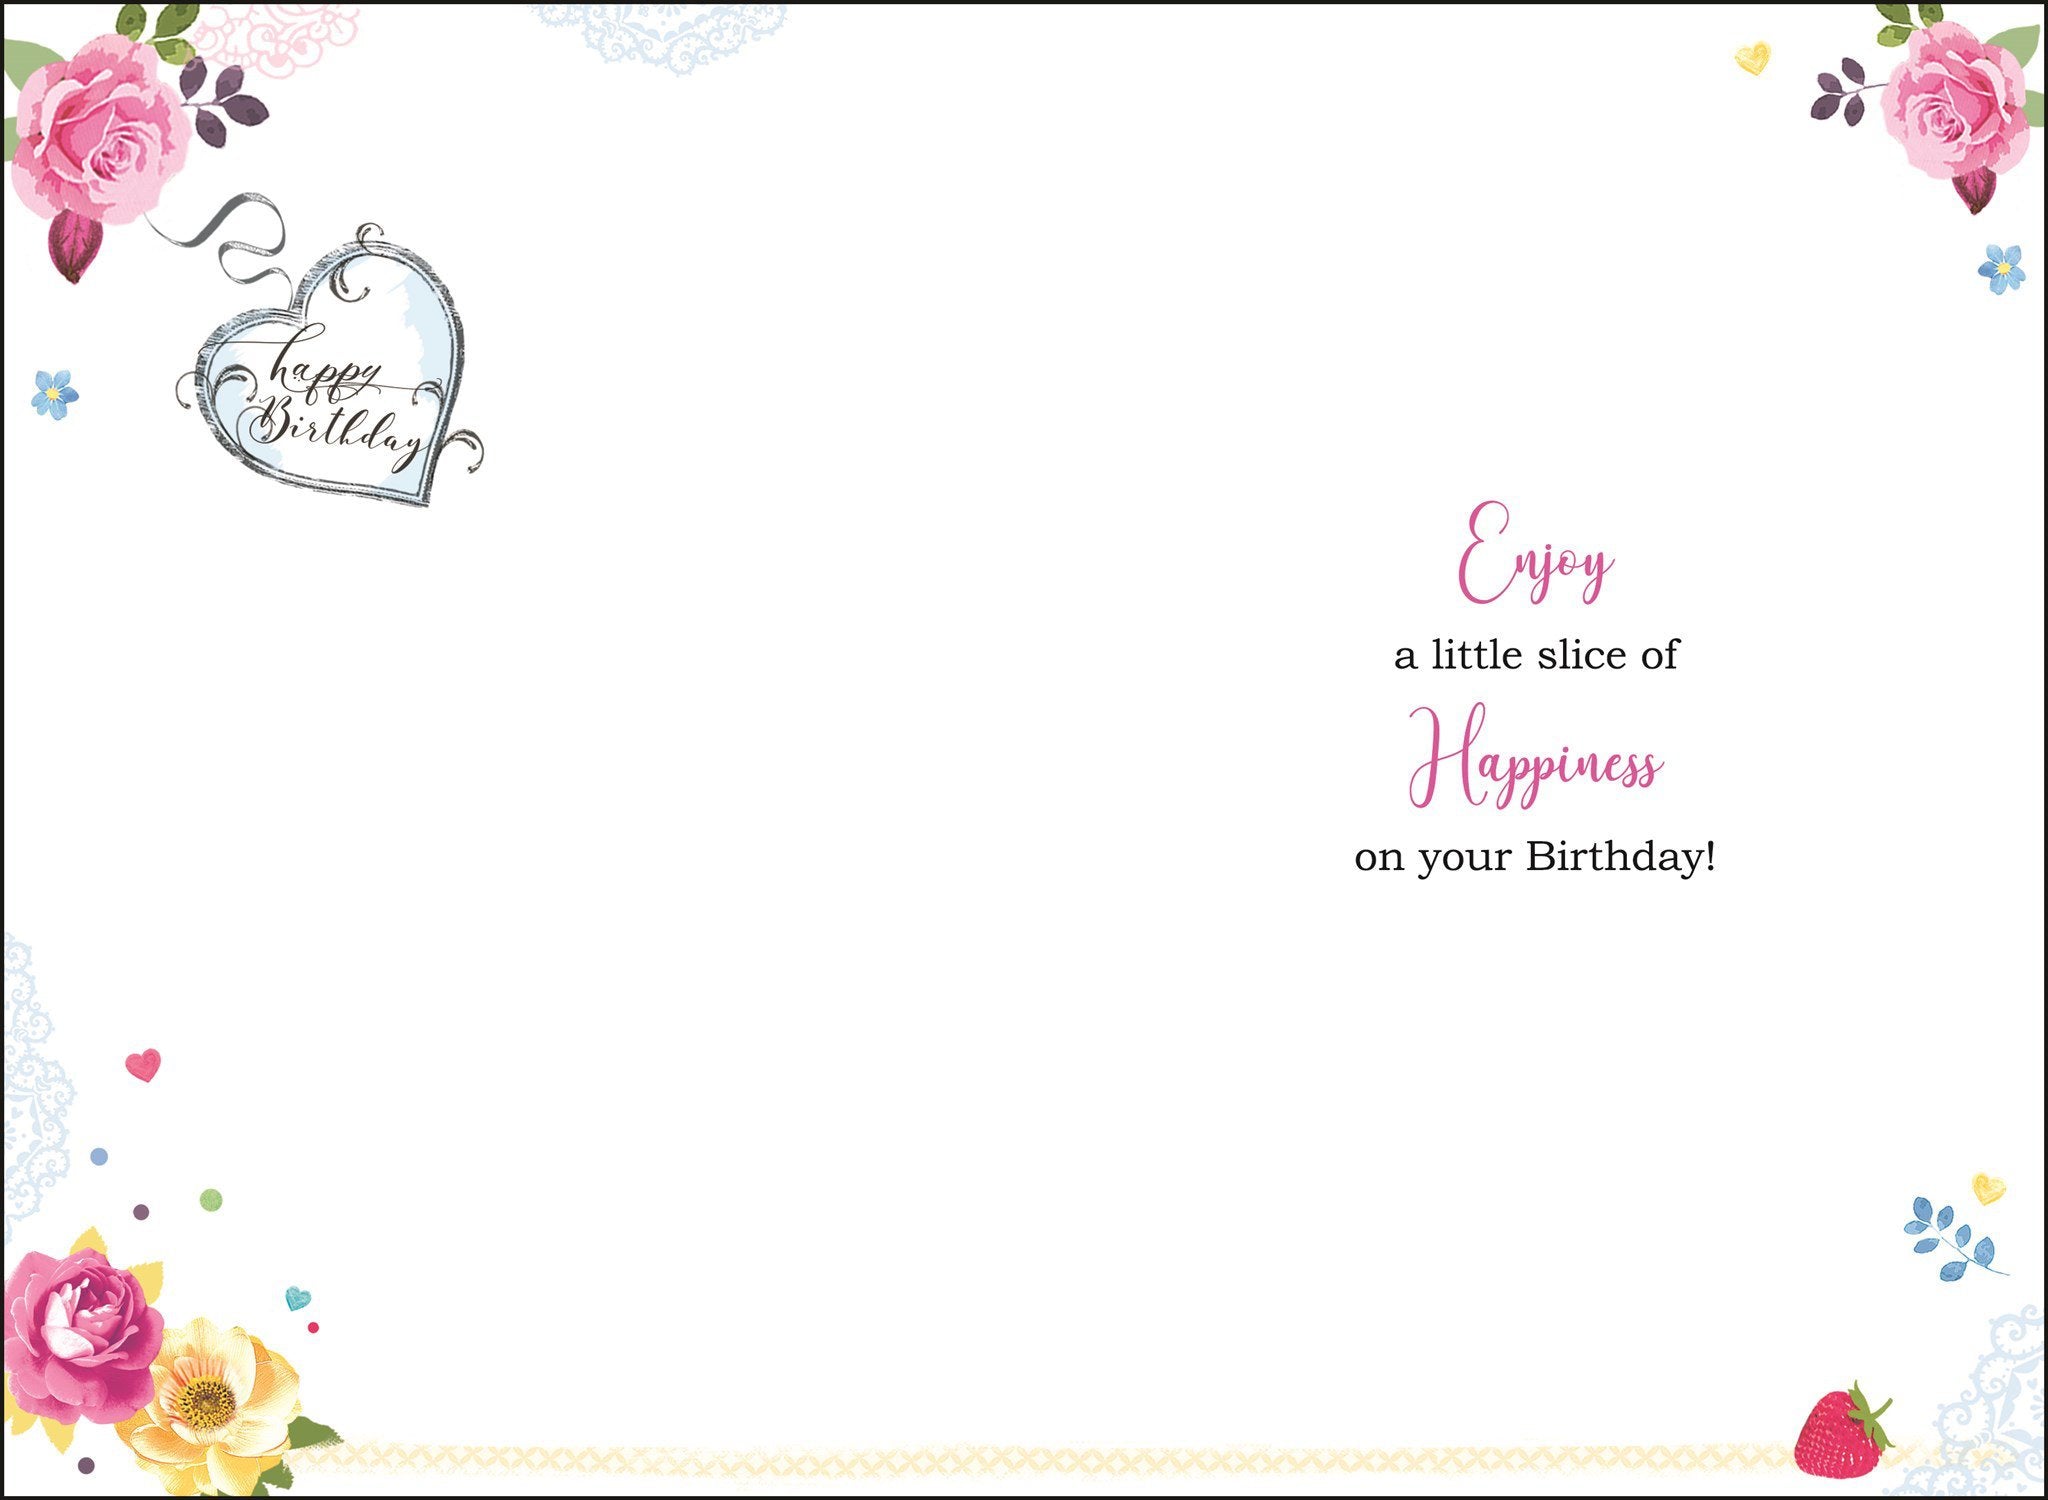 Inside of Open Female Birthday Cake Greetings Card